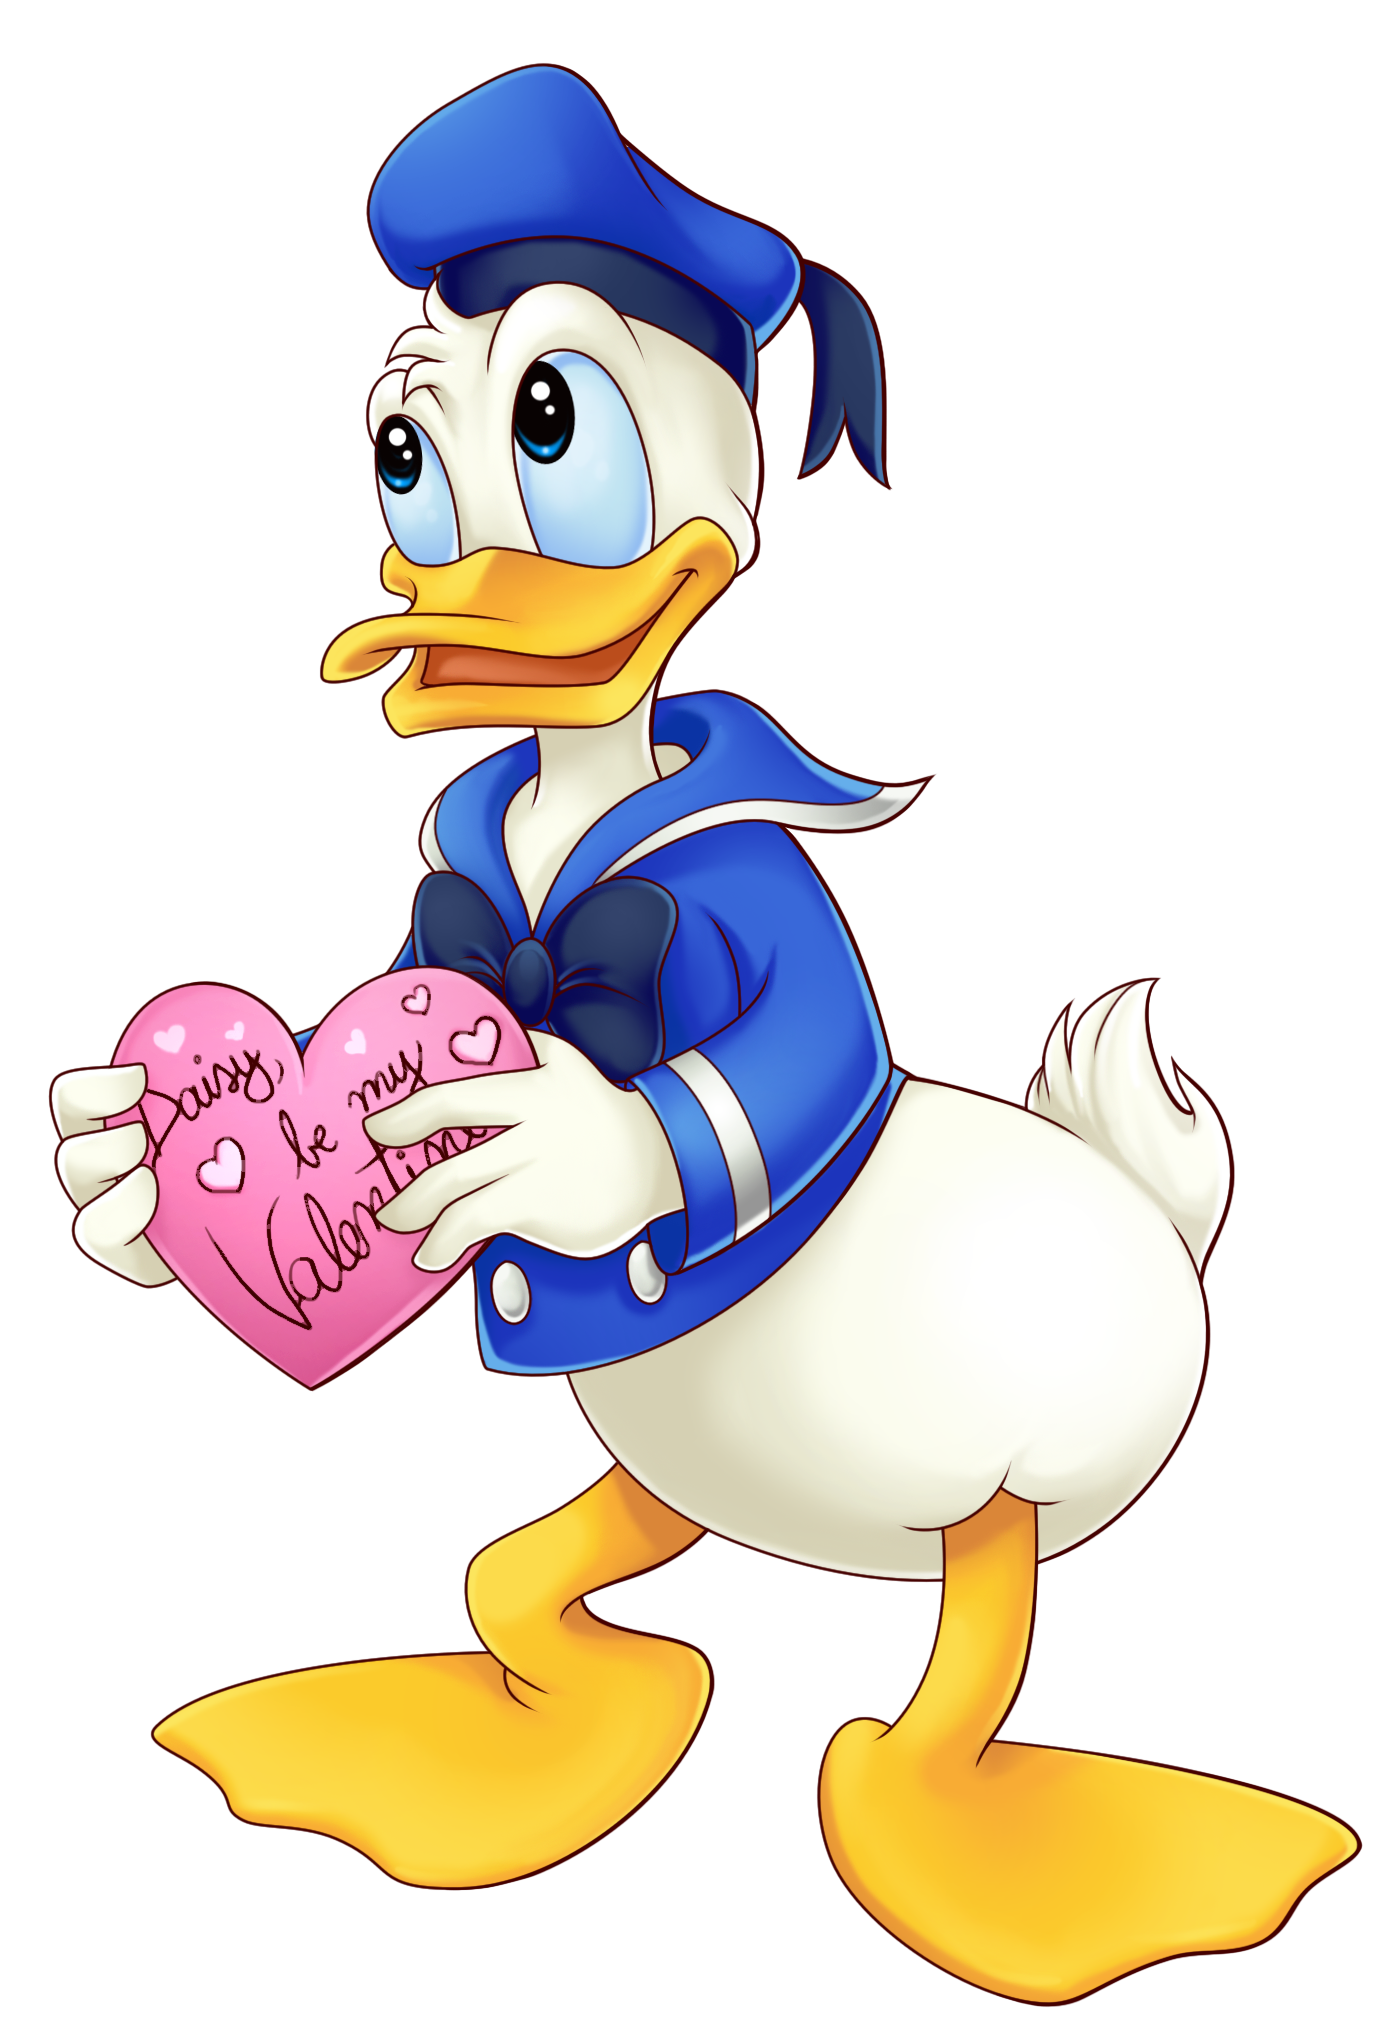 Donald Duck Valentine Cartoon Wallpaper For Pc Cartoons